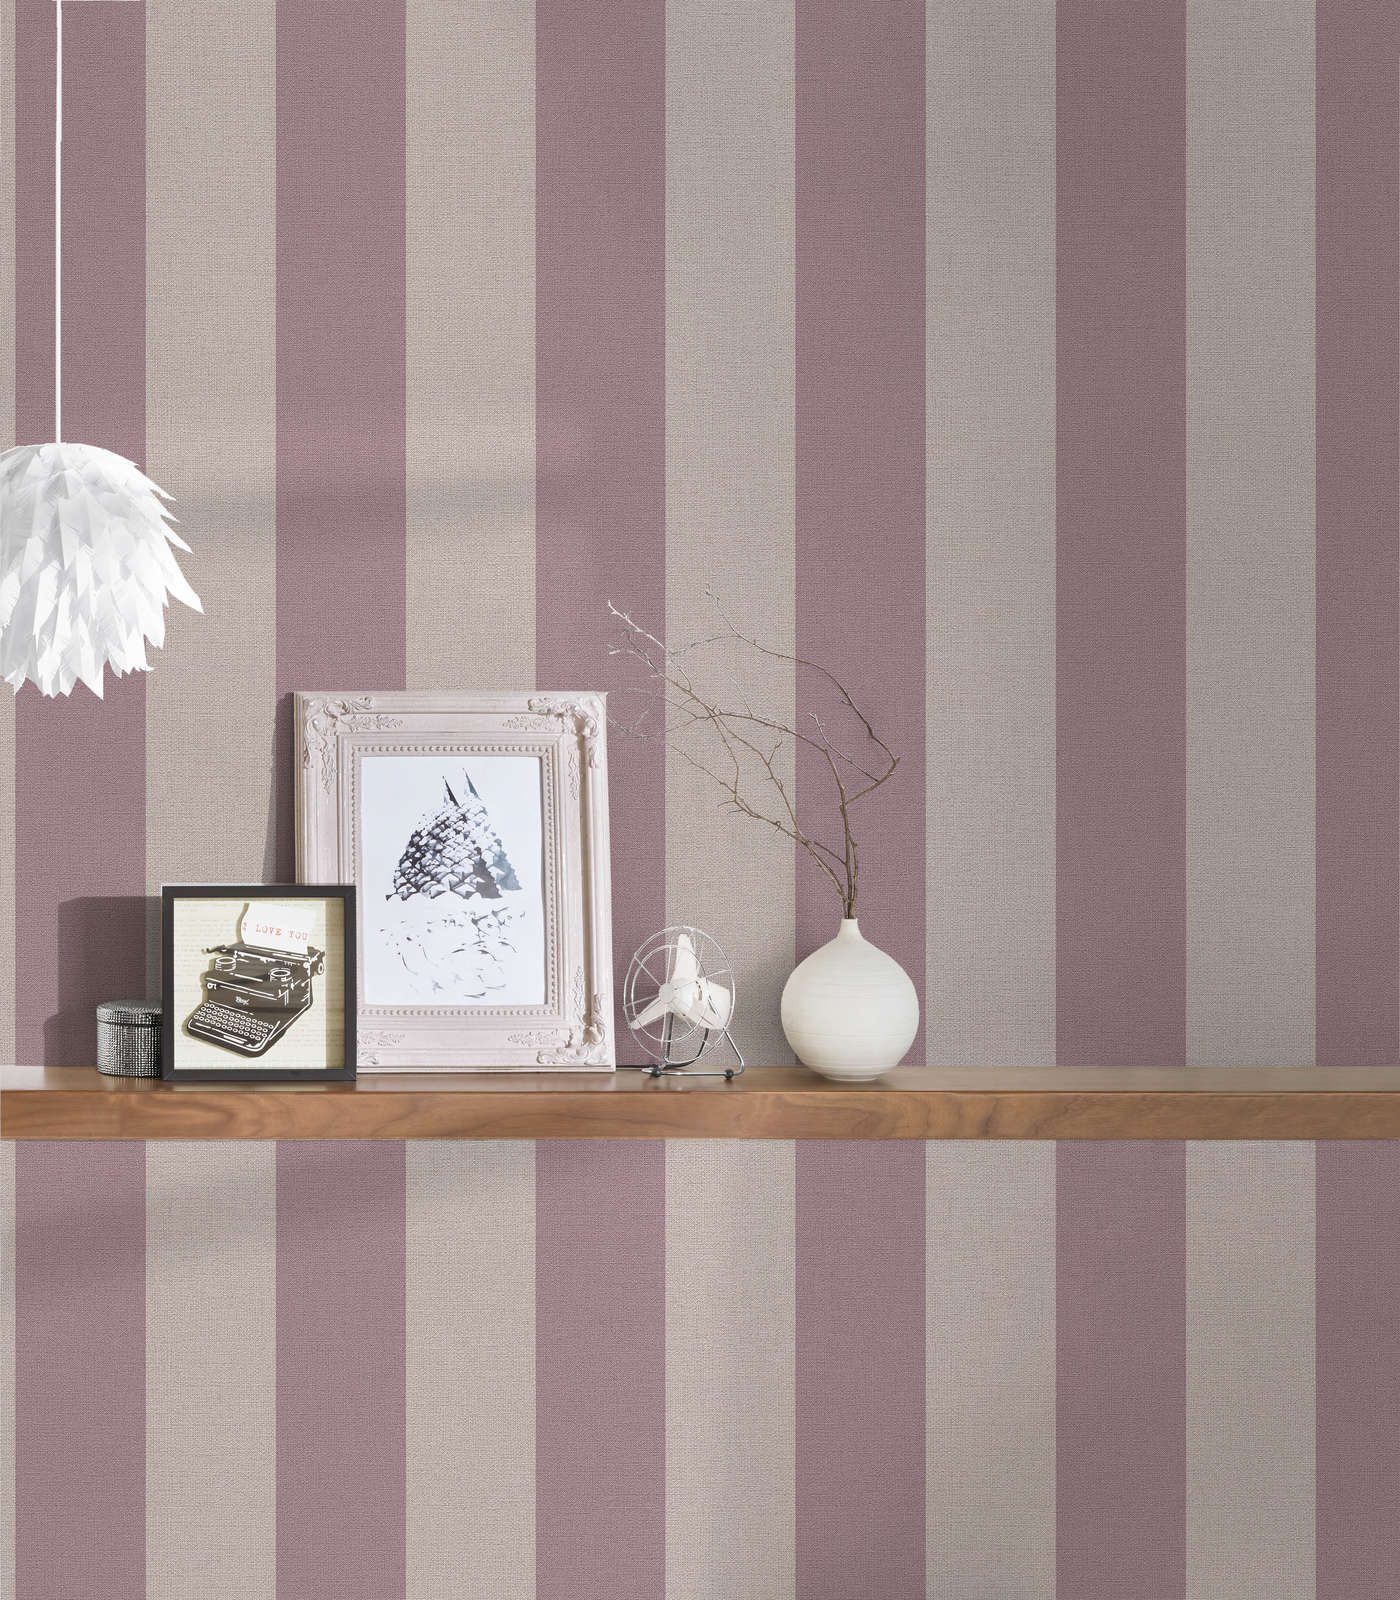             PVC-free striped wallpaper with linen look - purple, grey
        